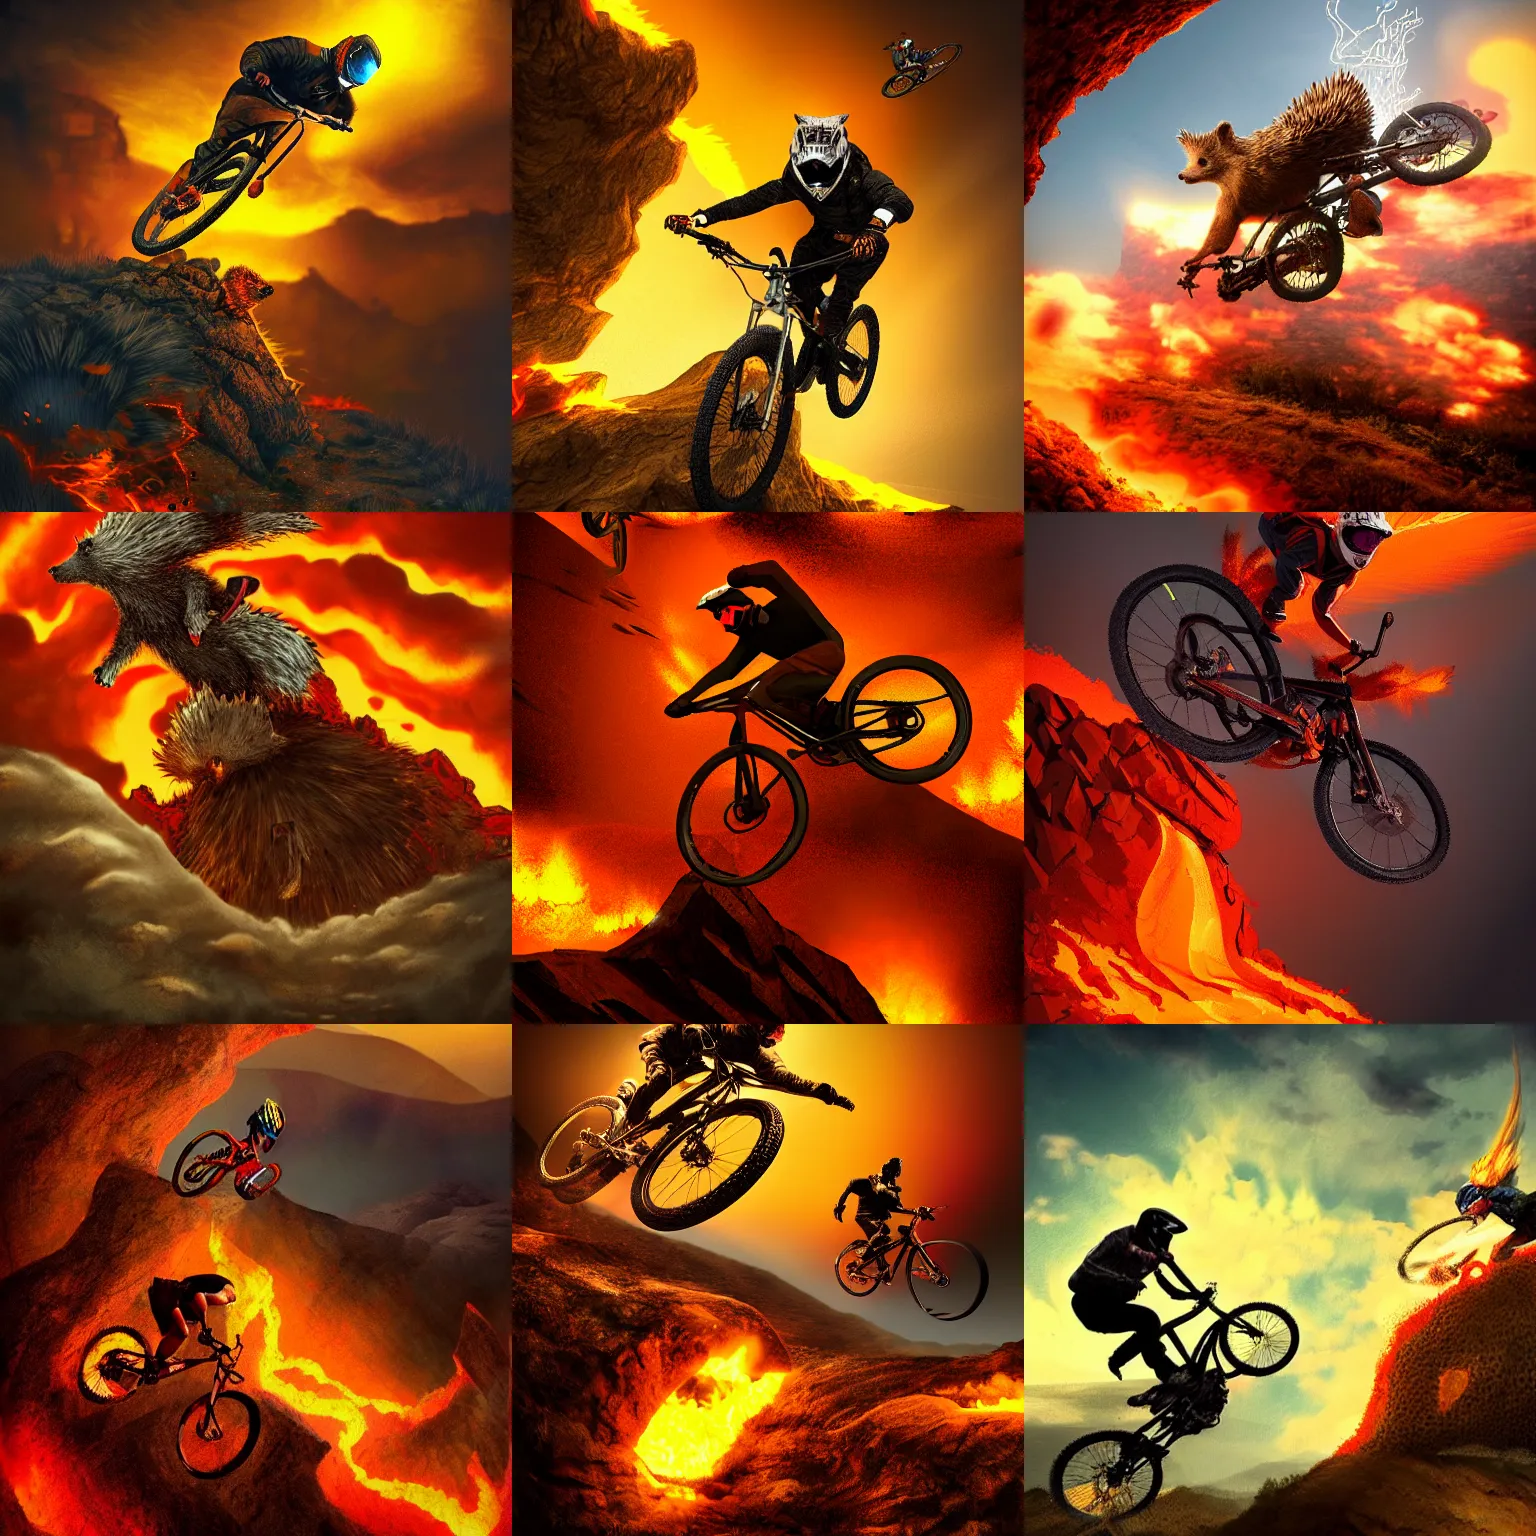 Prompt: mountain biker flying over hedgehog, falling into the fiery depths of hell, dramatic lighting, intricate, digital art, trending on artstation